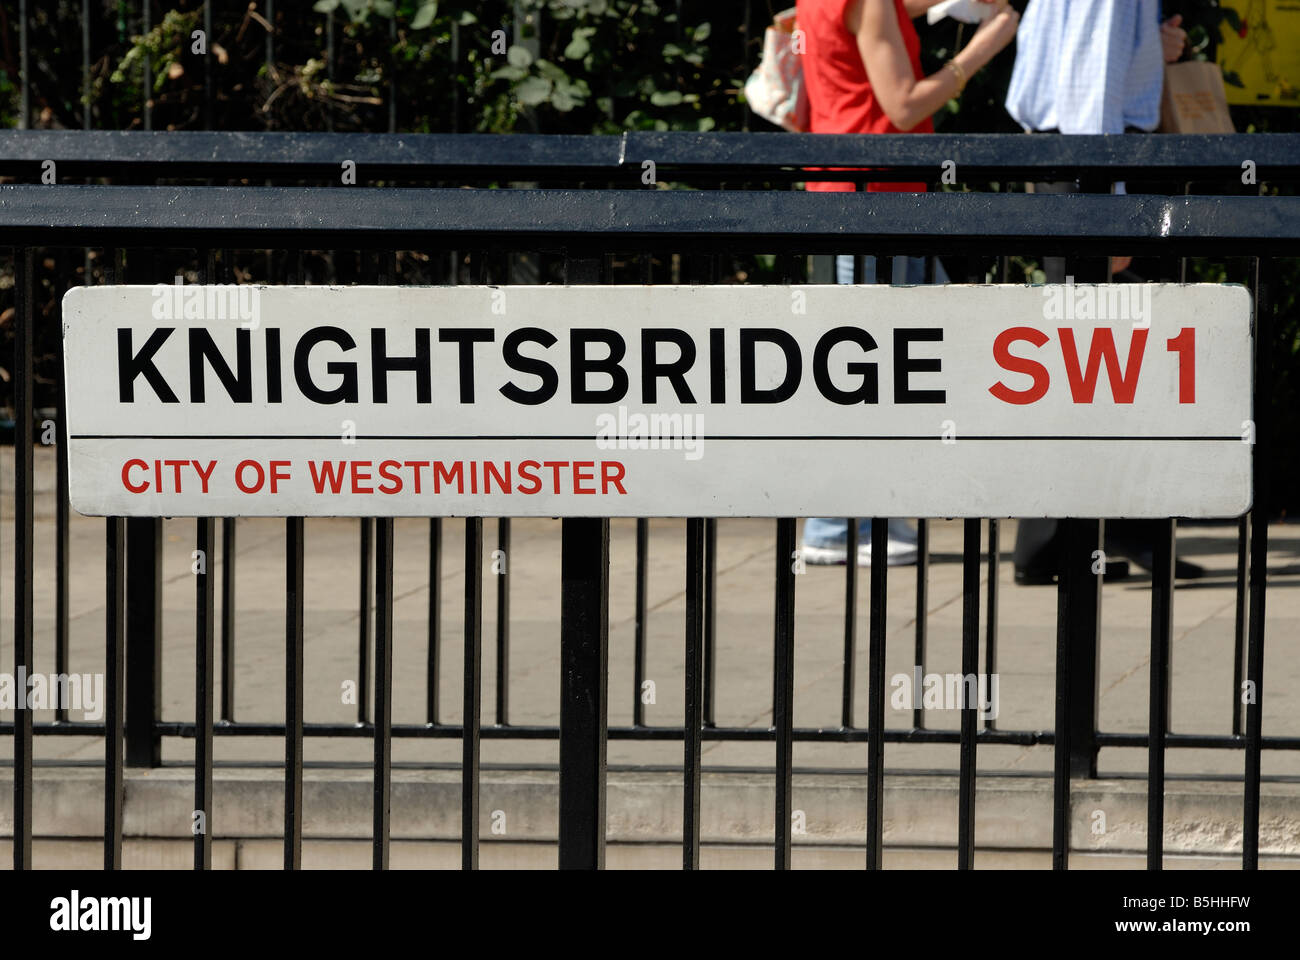 Knightsbridge SW1 road sign Banque D'Images